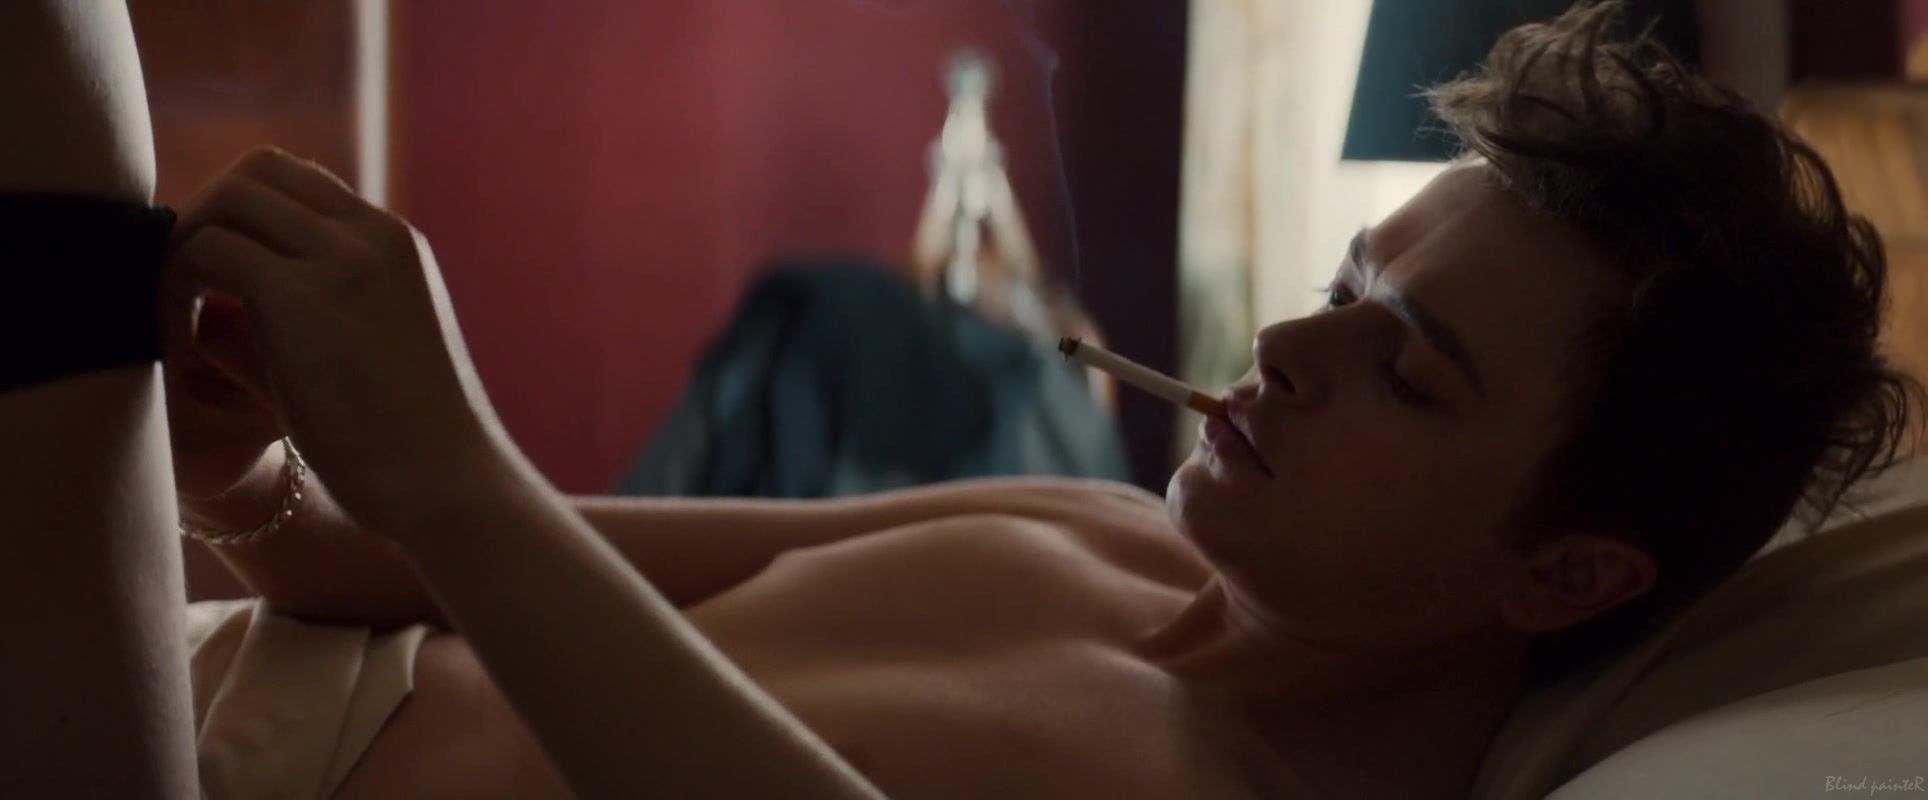 Women Alessandra Mastronardi nude - Life (2015) TorrentZ - 2